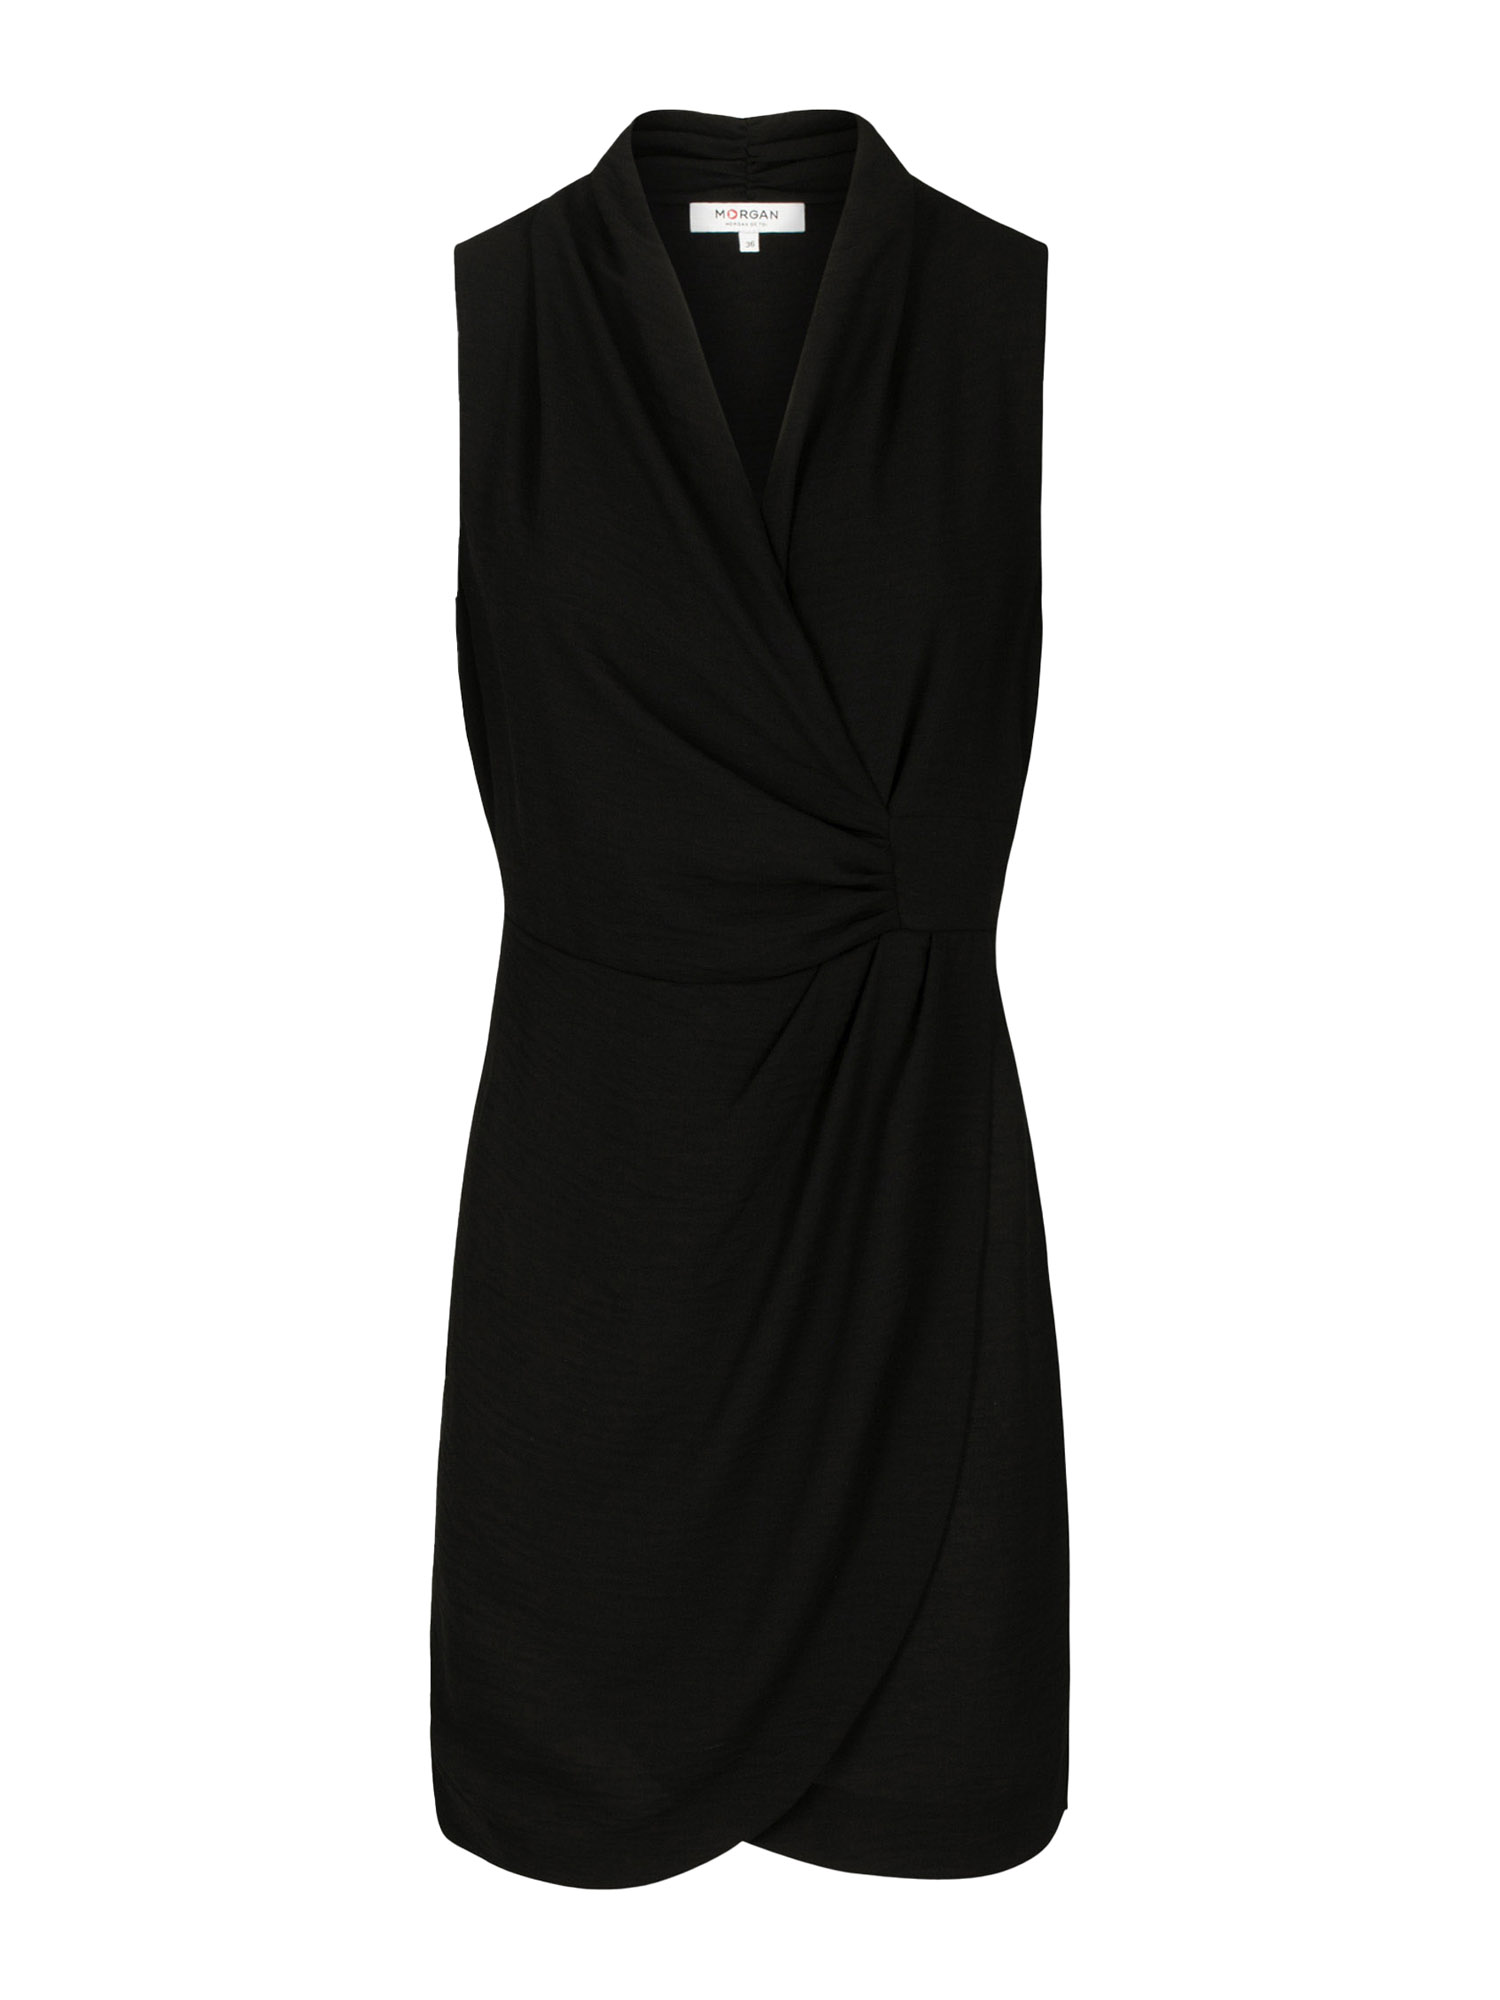 Plus size dkPvX Morgan Sukienka RENALA w kolorze Czarnym 